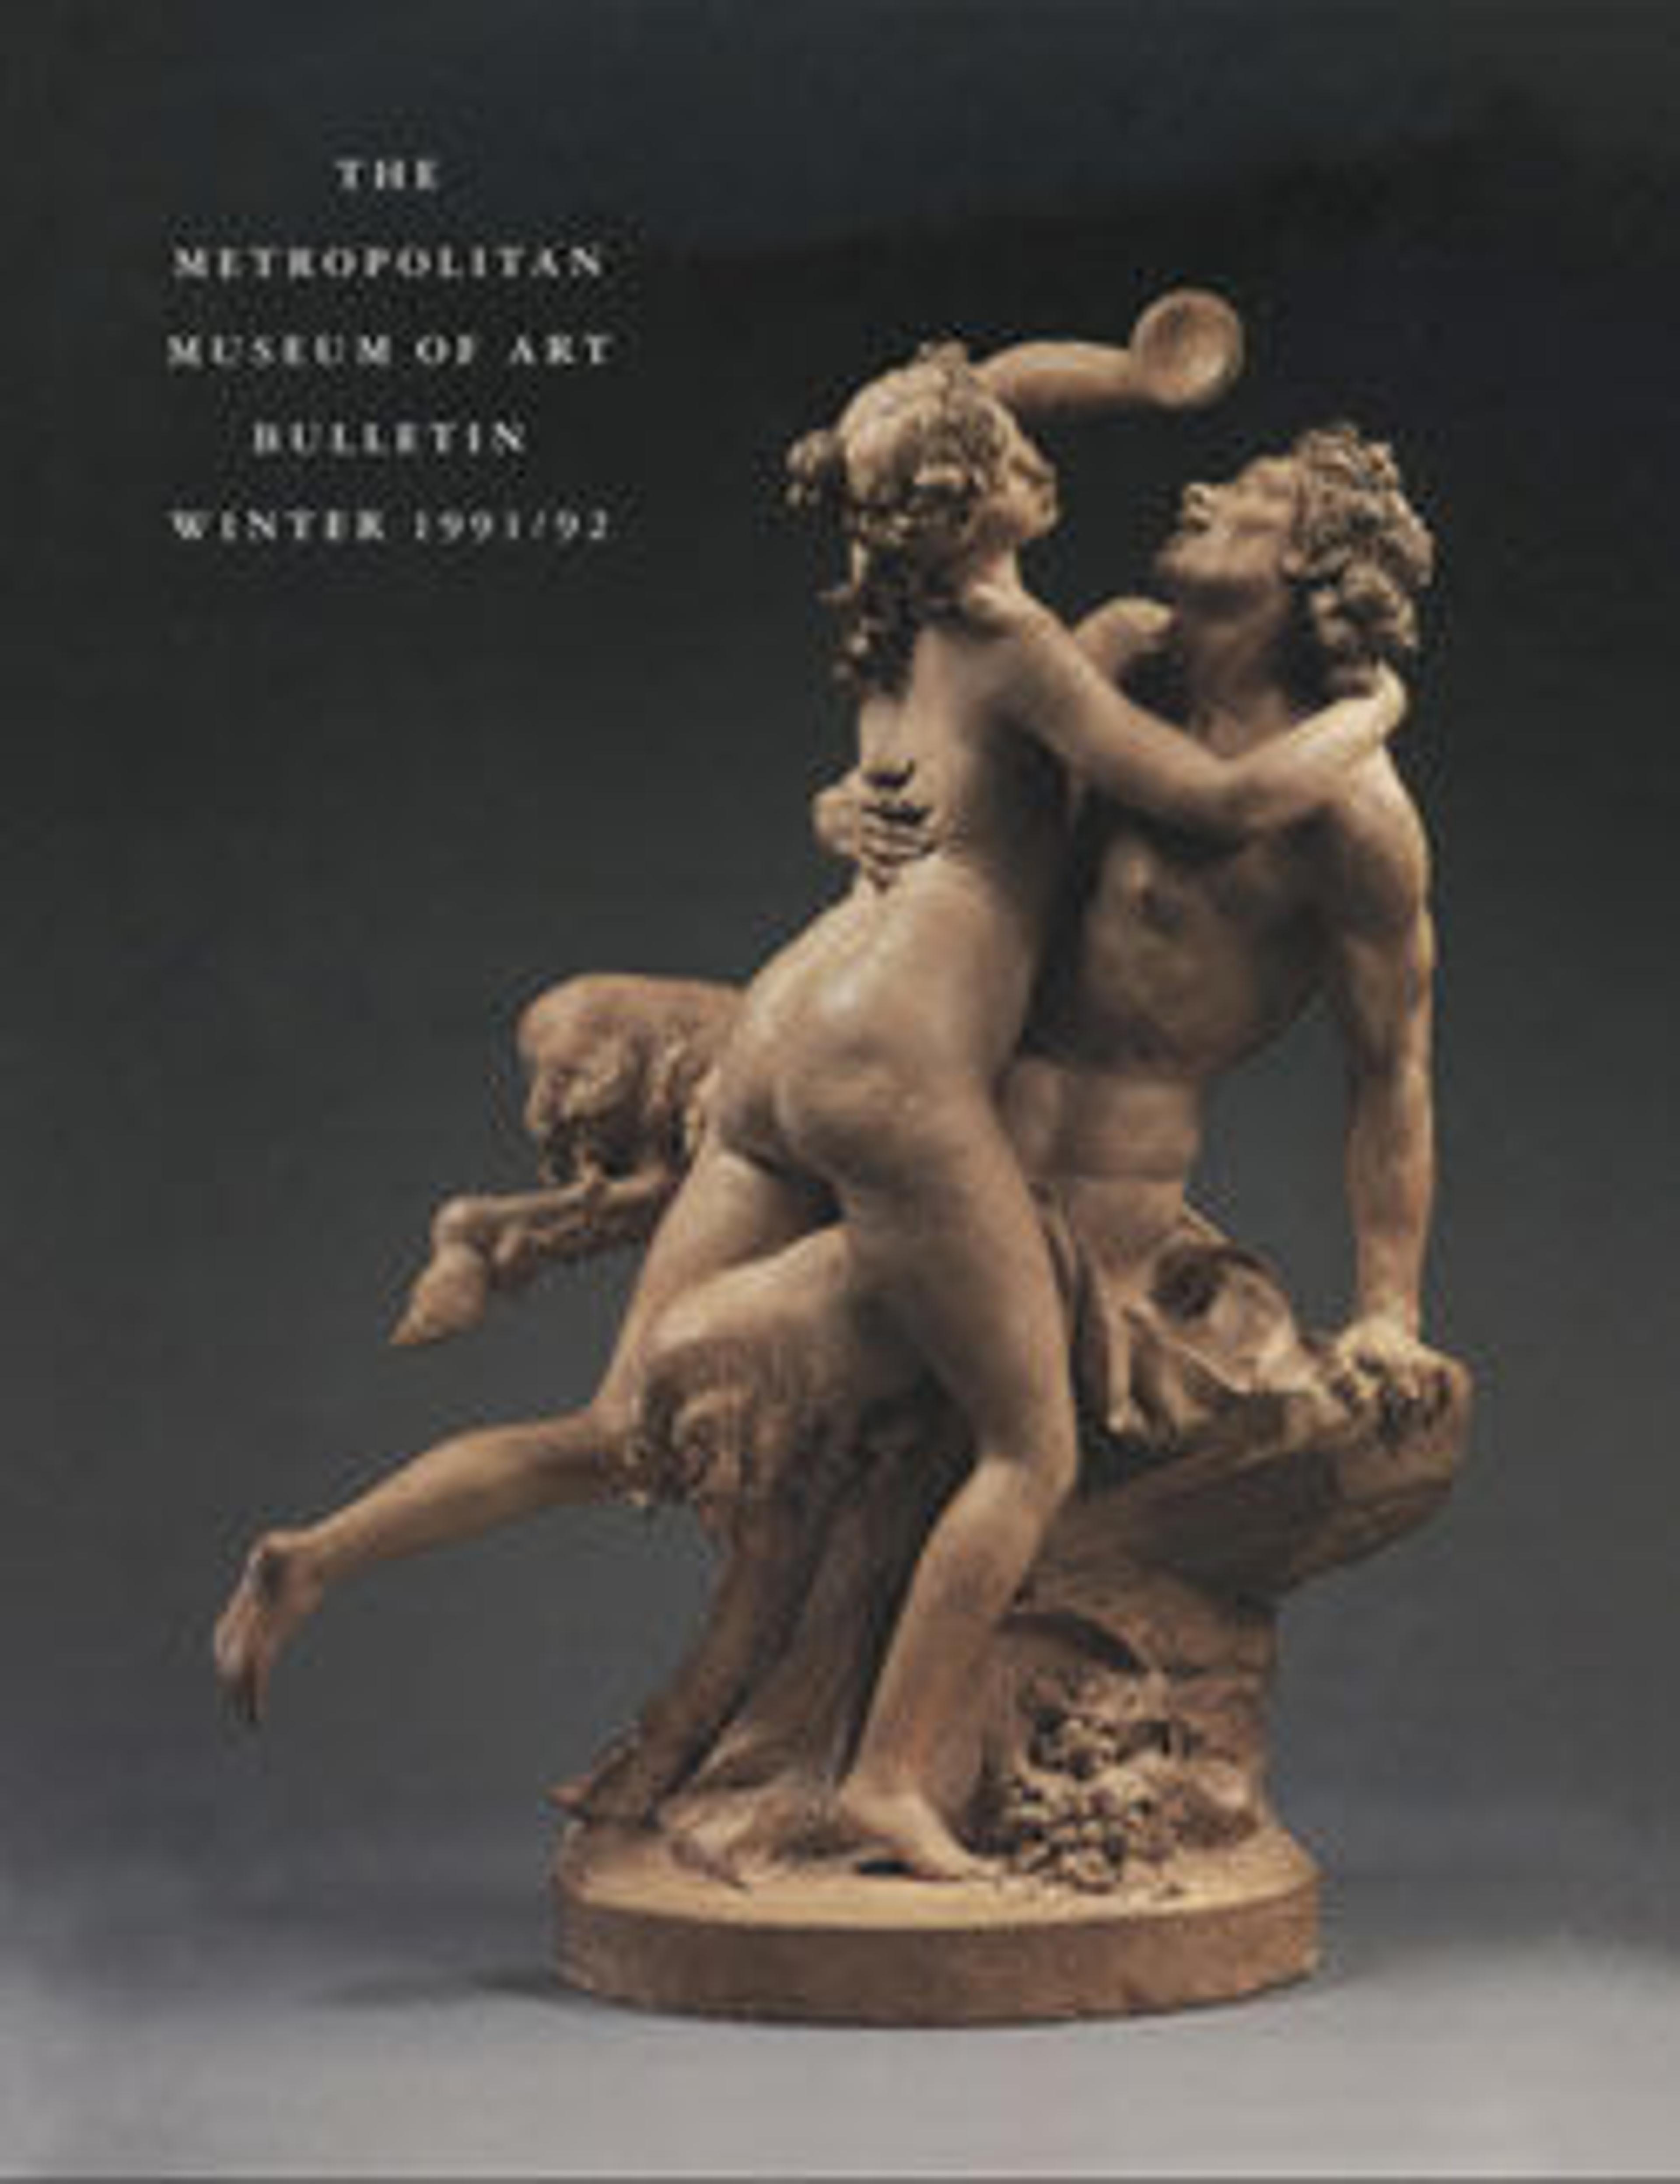 "French Terracottas": The Metropolitan Museum of Art Bulletin, v. 49, no. 3 (Winter, 1991-1992)